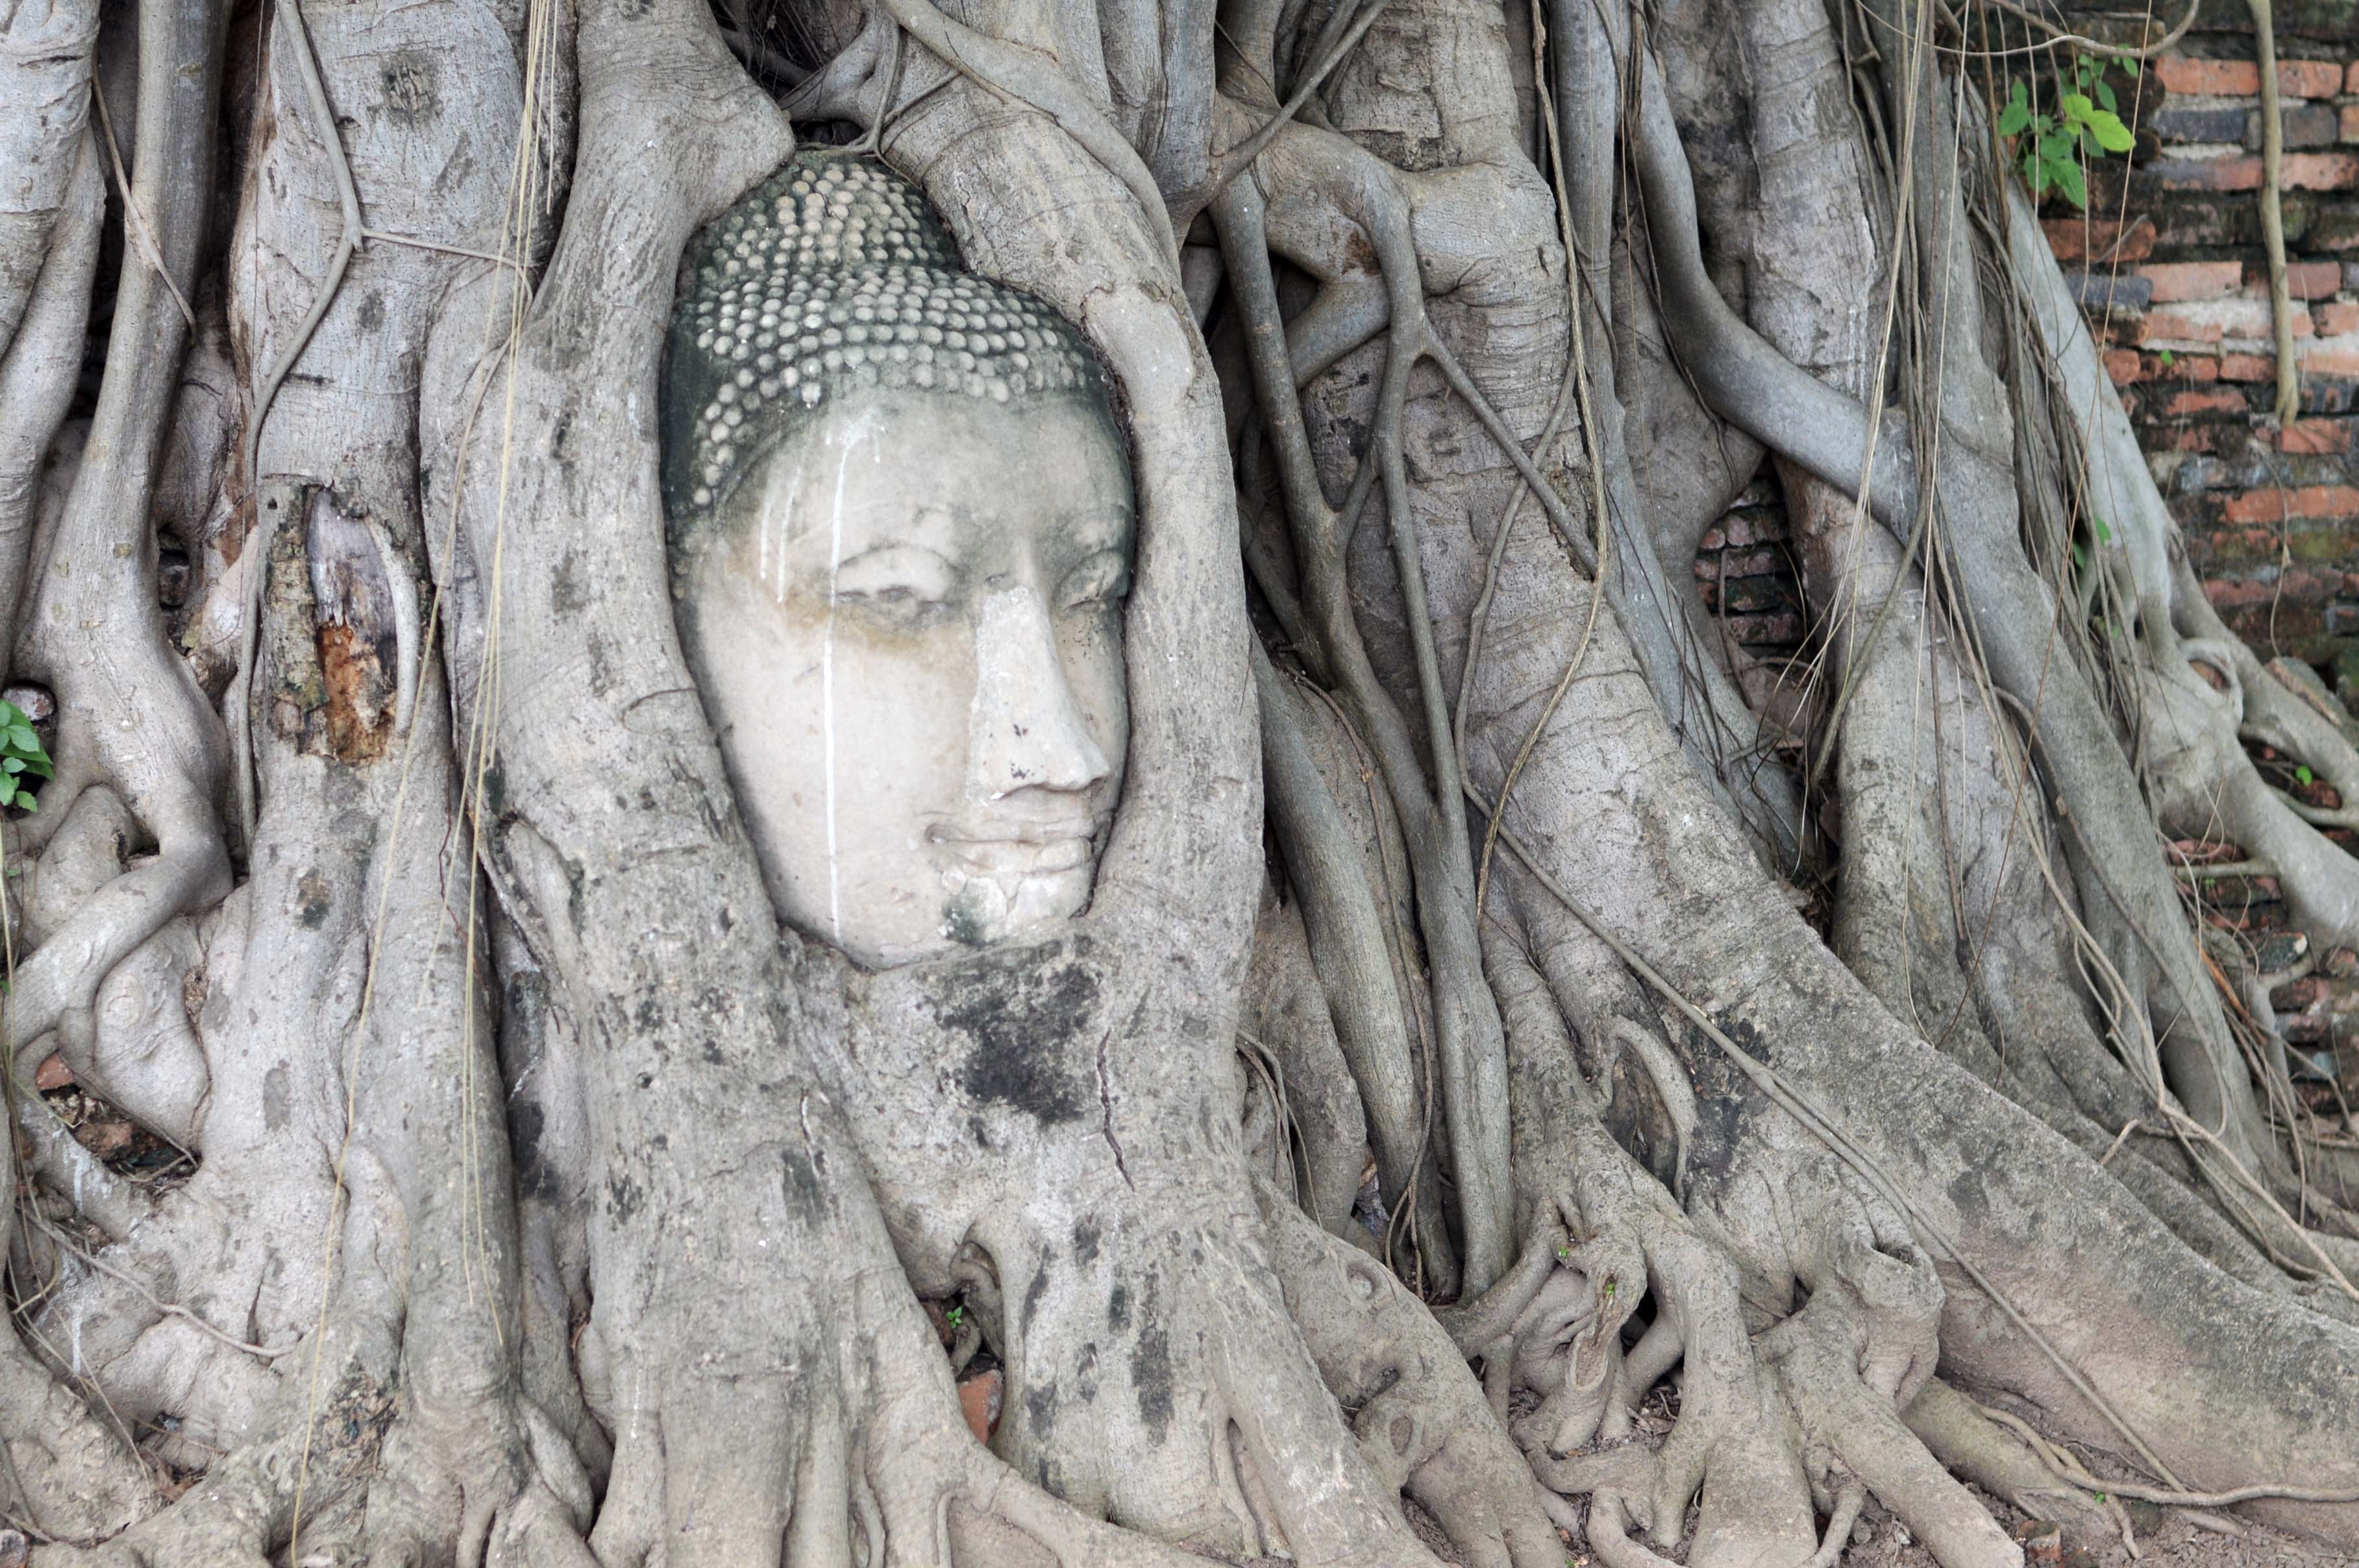 gautama buddha headbust carved on tree trunk